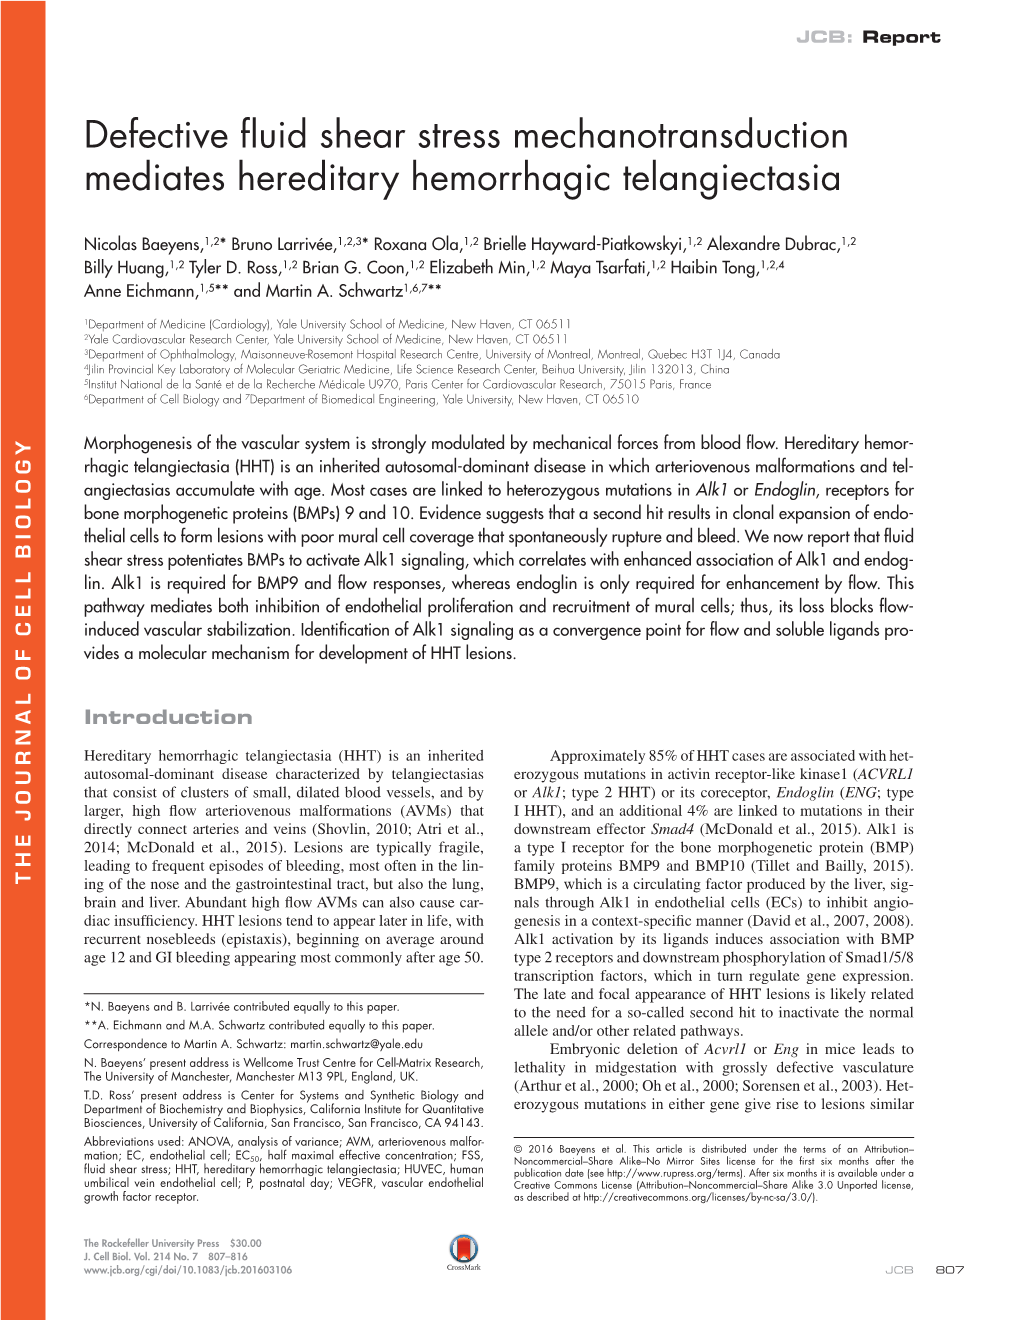 Defective Fluid Shear Stress Mechanotransduction Mediates Hereditary Hemorrhagic Telangiectasia